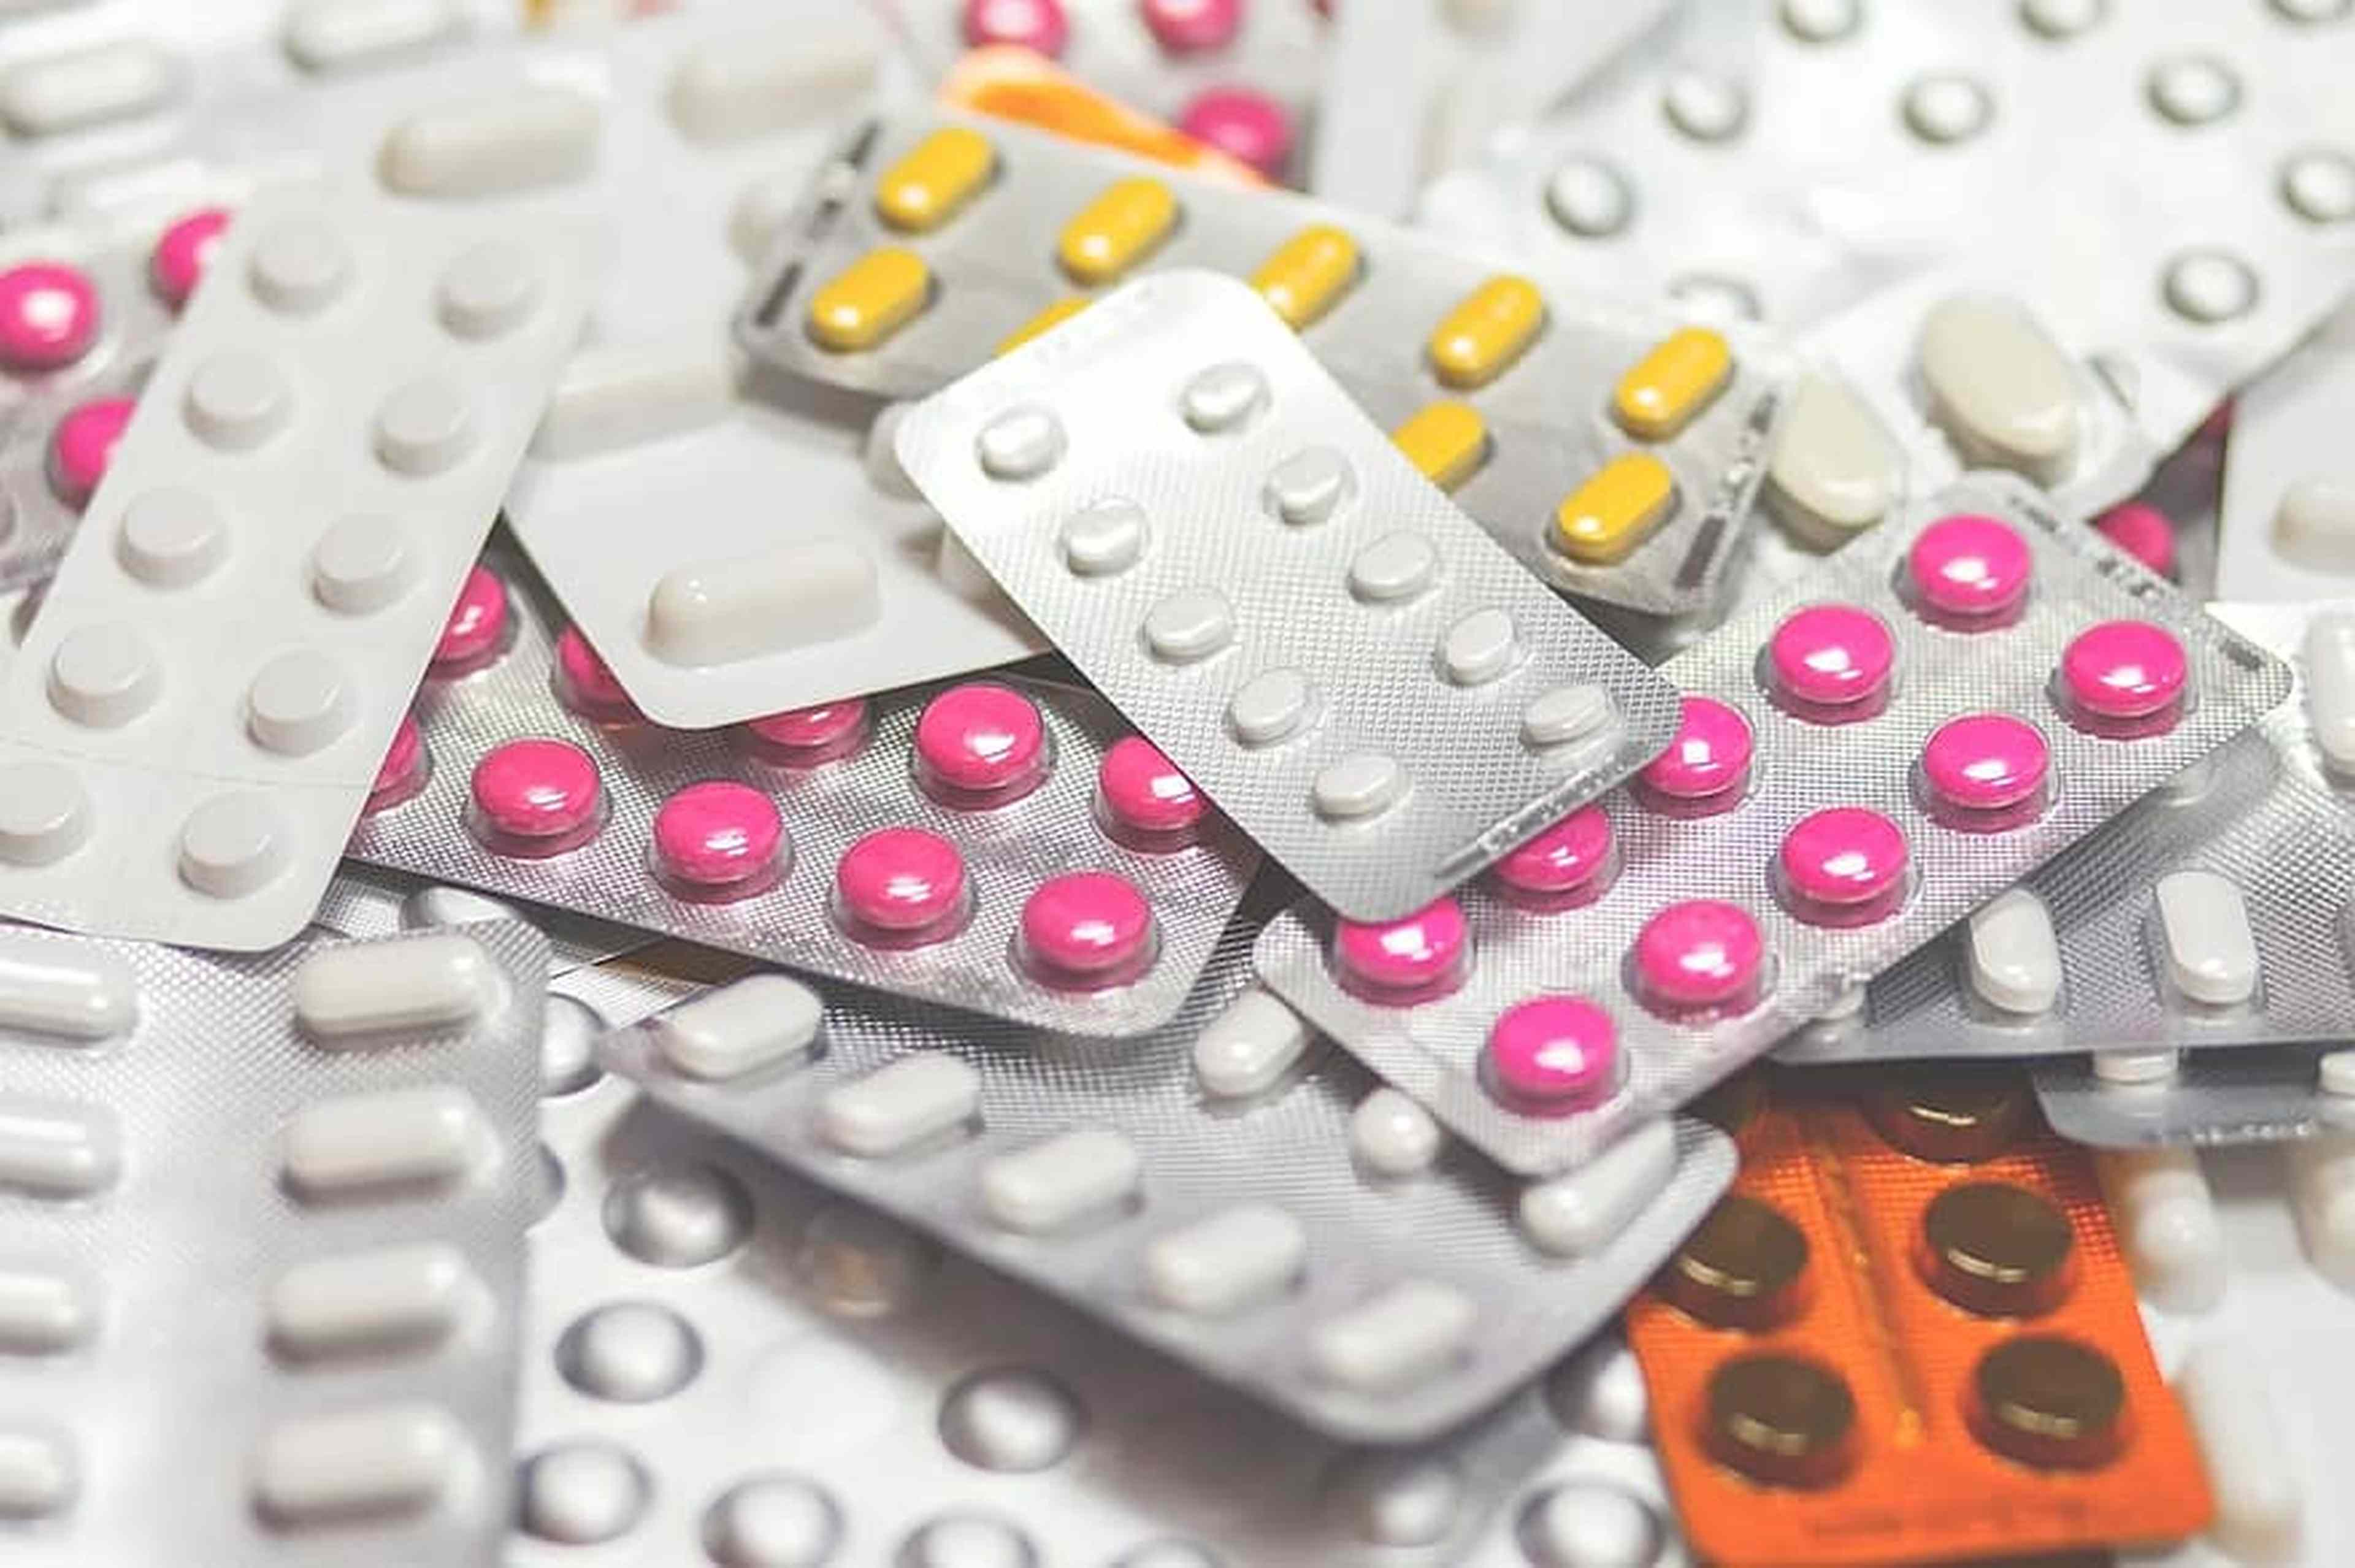 /2020/09/close-up-drugs-medical-medicine-pills-prescription-tablets-treatment-pharmaceutical